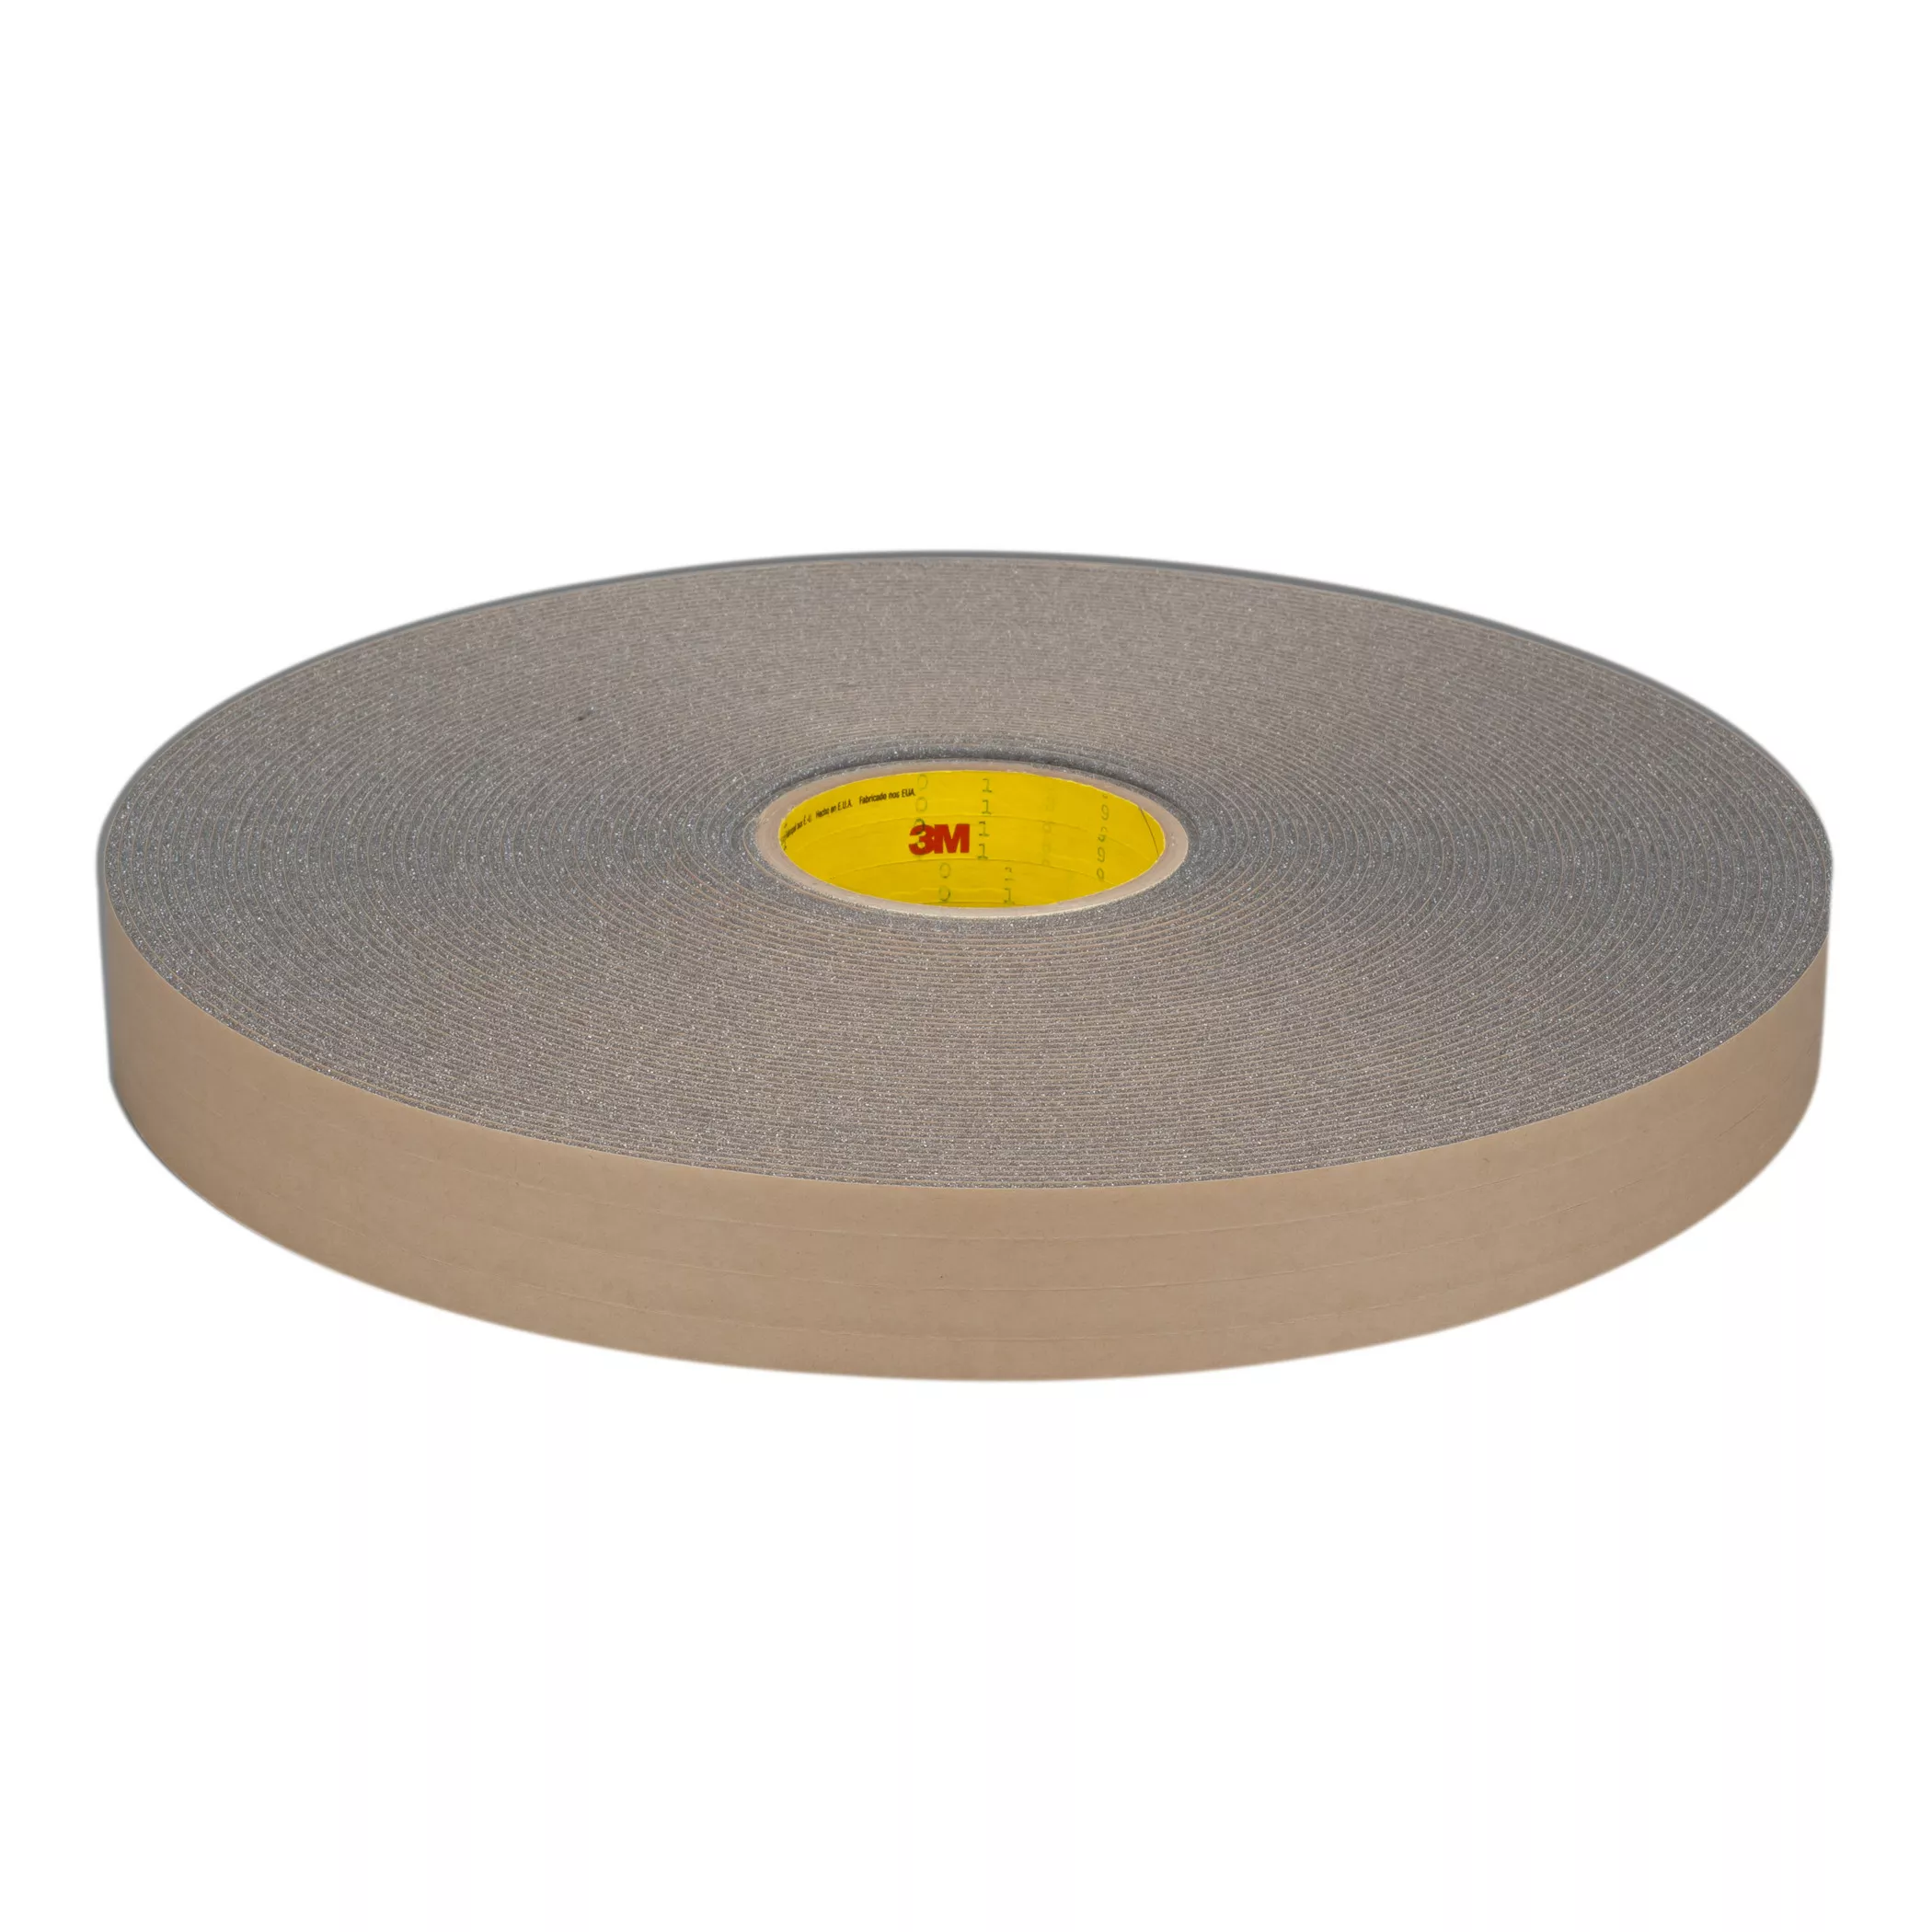 3M™ Urethane Foam Tape 4318, Charcoal Gray, 1/2 in x 36 yd, 125 mil, 18
Roll/Case